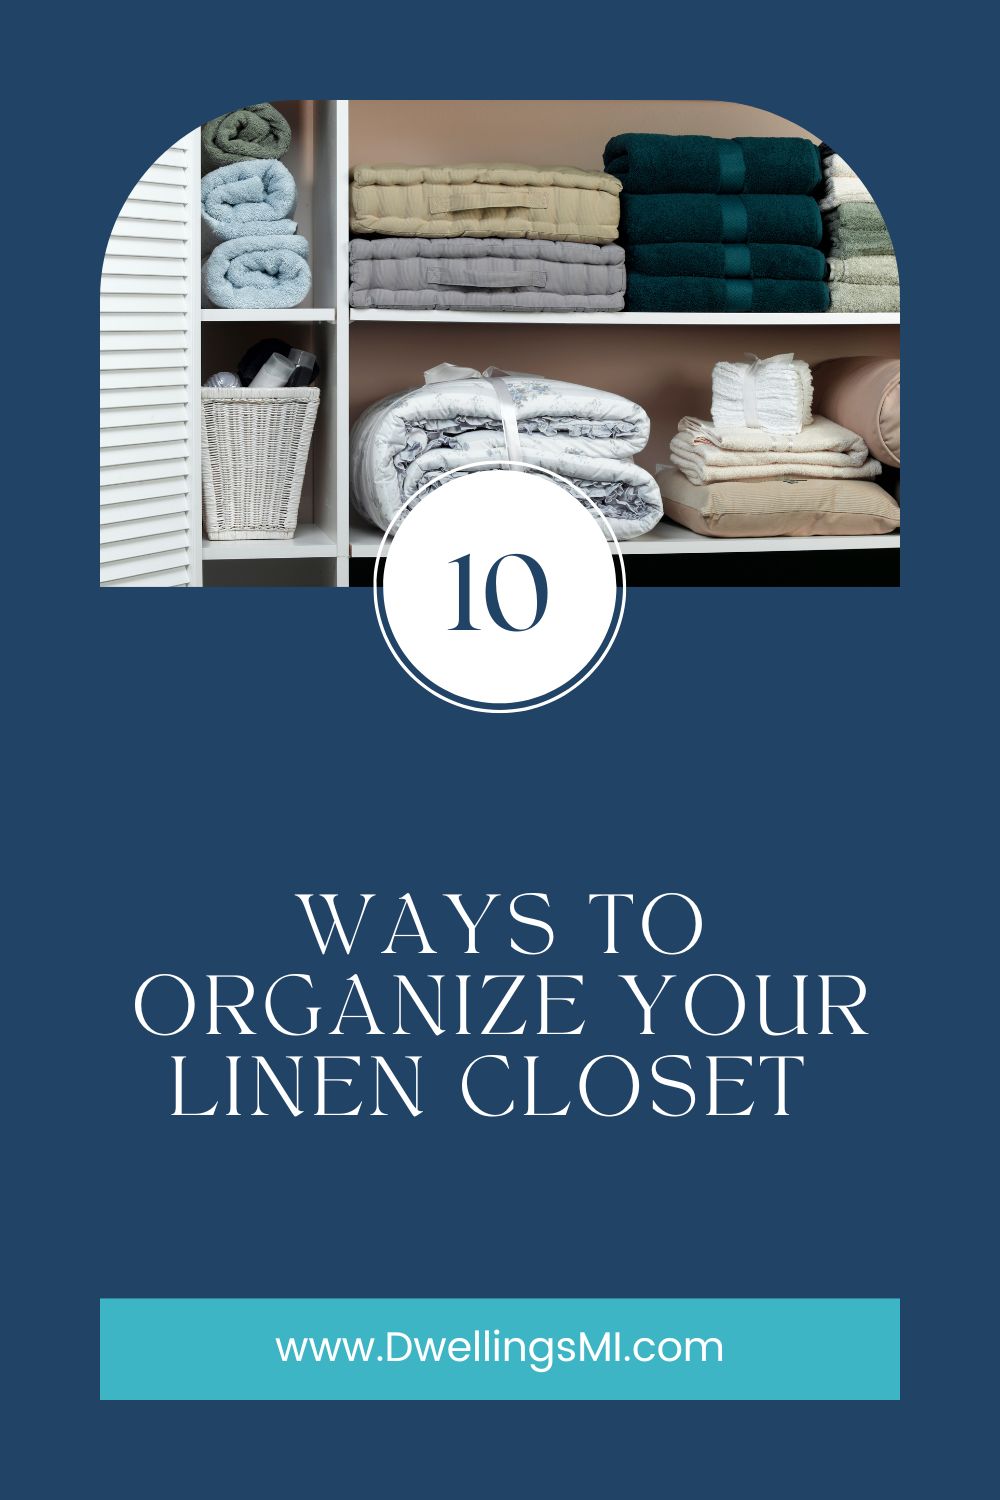 Organize your linen closet